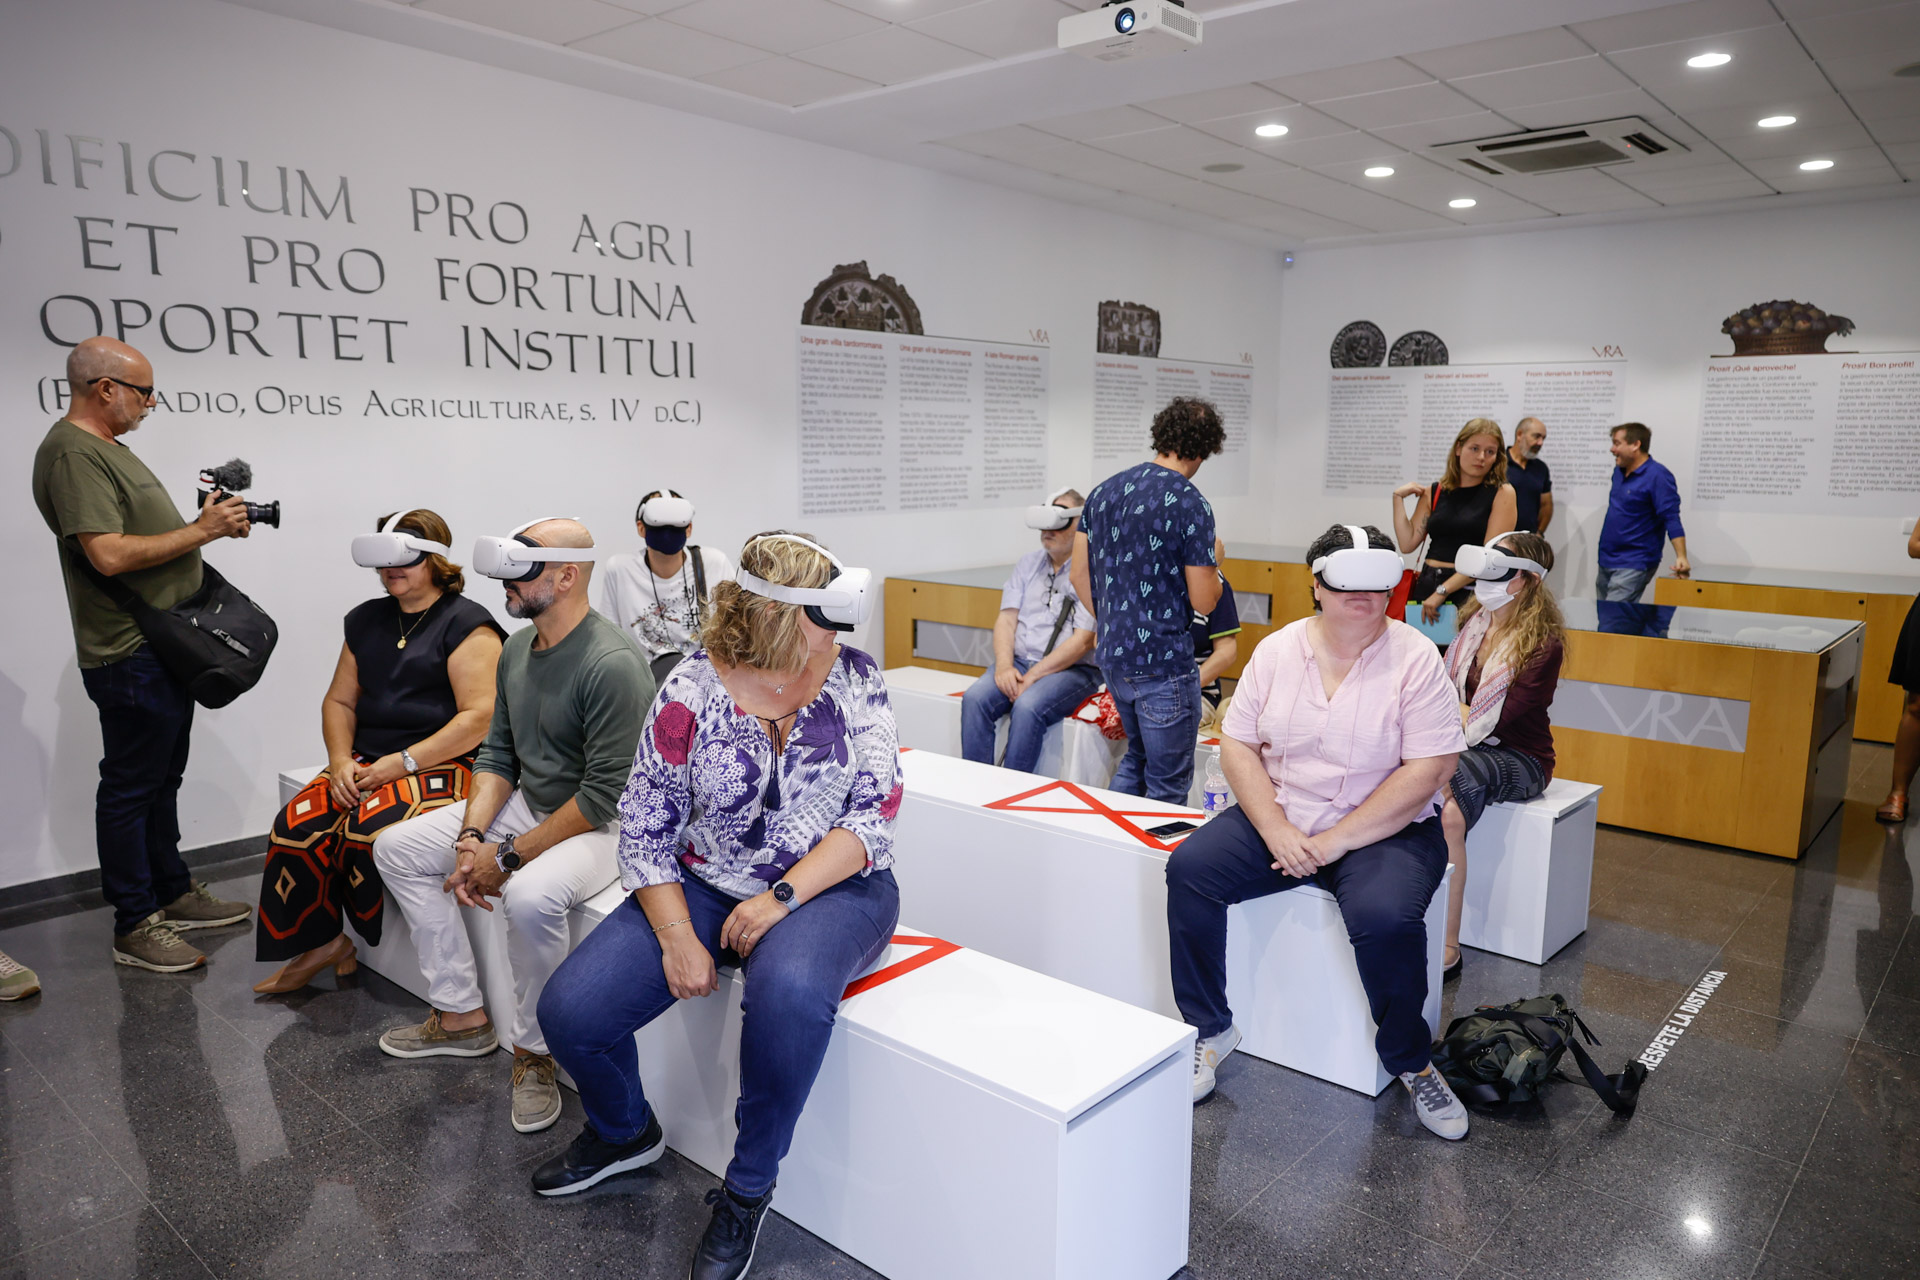 Cultura_gafas realidad virtual museo villa romana (6)